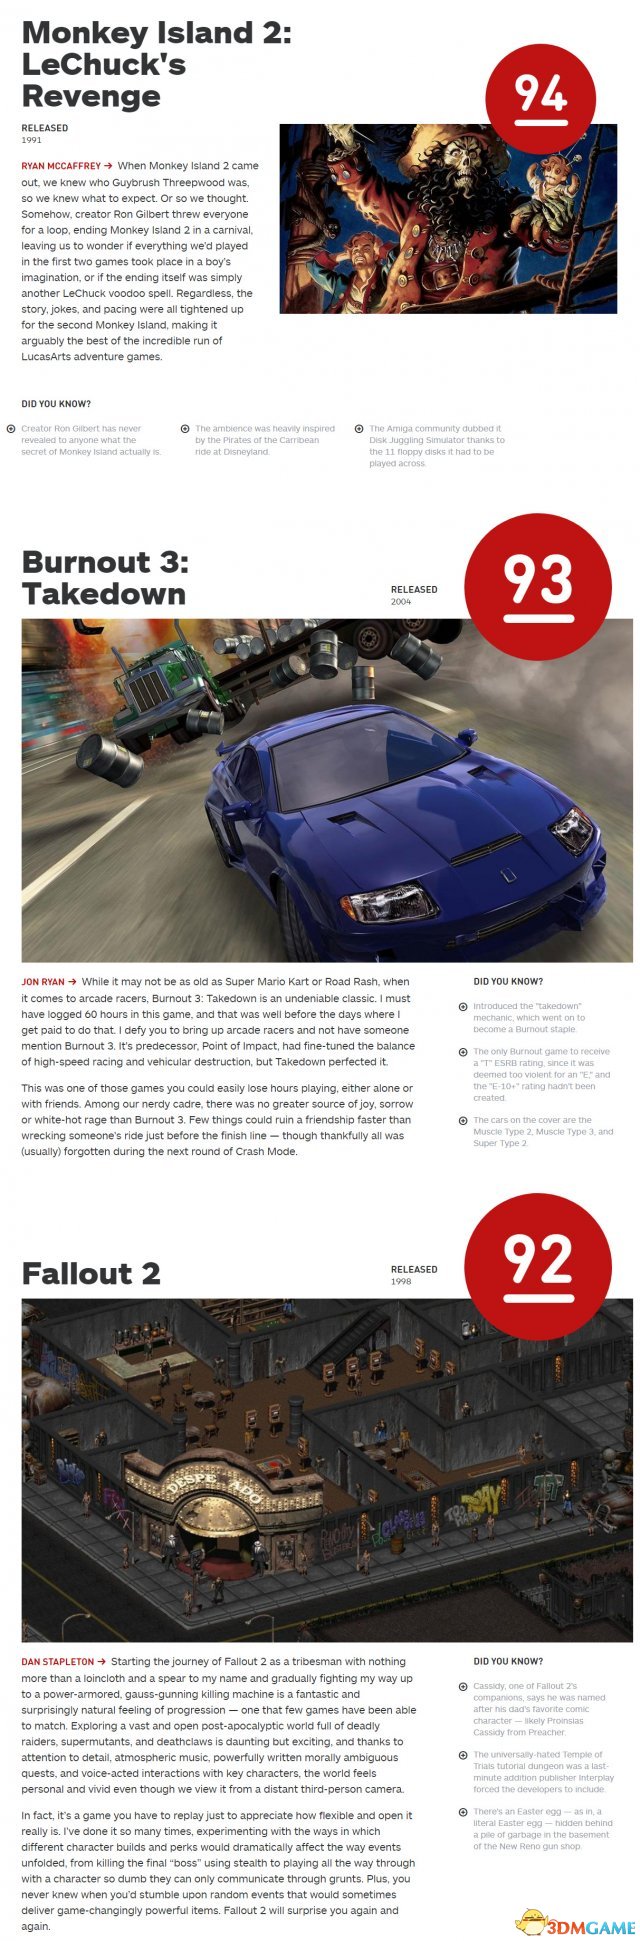 IGN评选TOP100游戏 《DOTA2》排名远超《LOL》